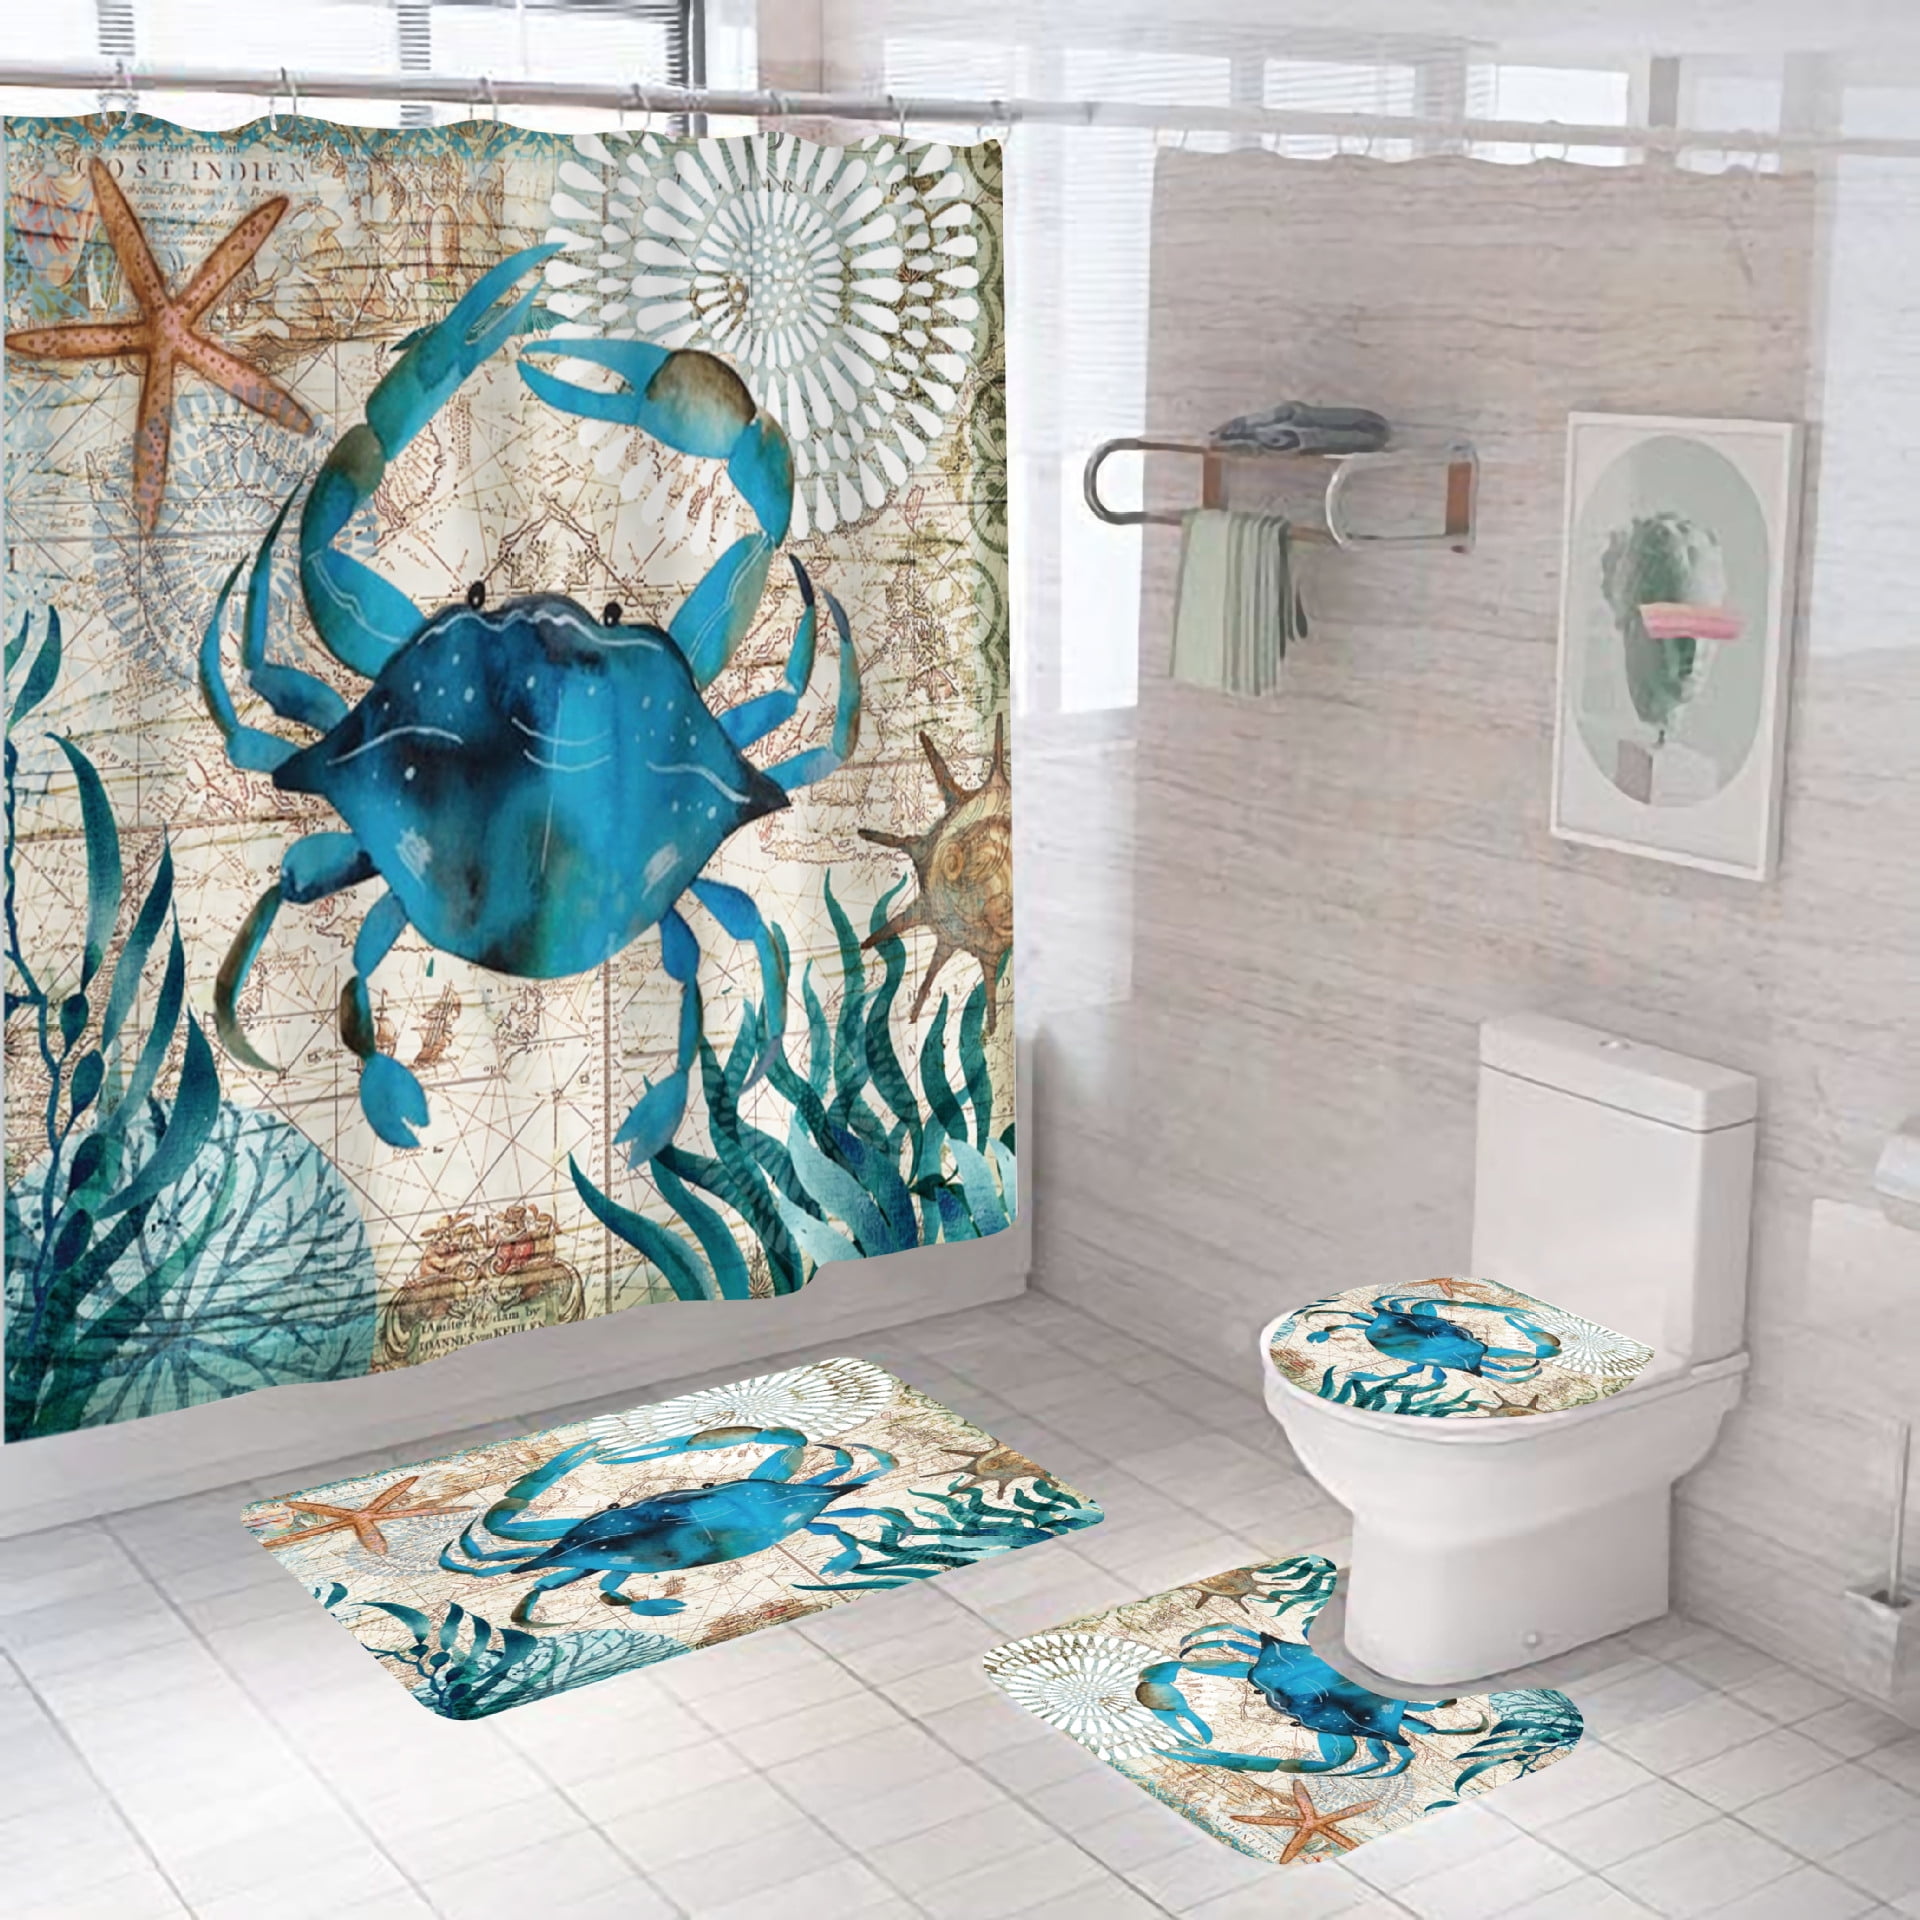 Cloth Mildew Bathroom Waterproof Shower Curtain 12 Hooks free ship & Bath Mat